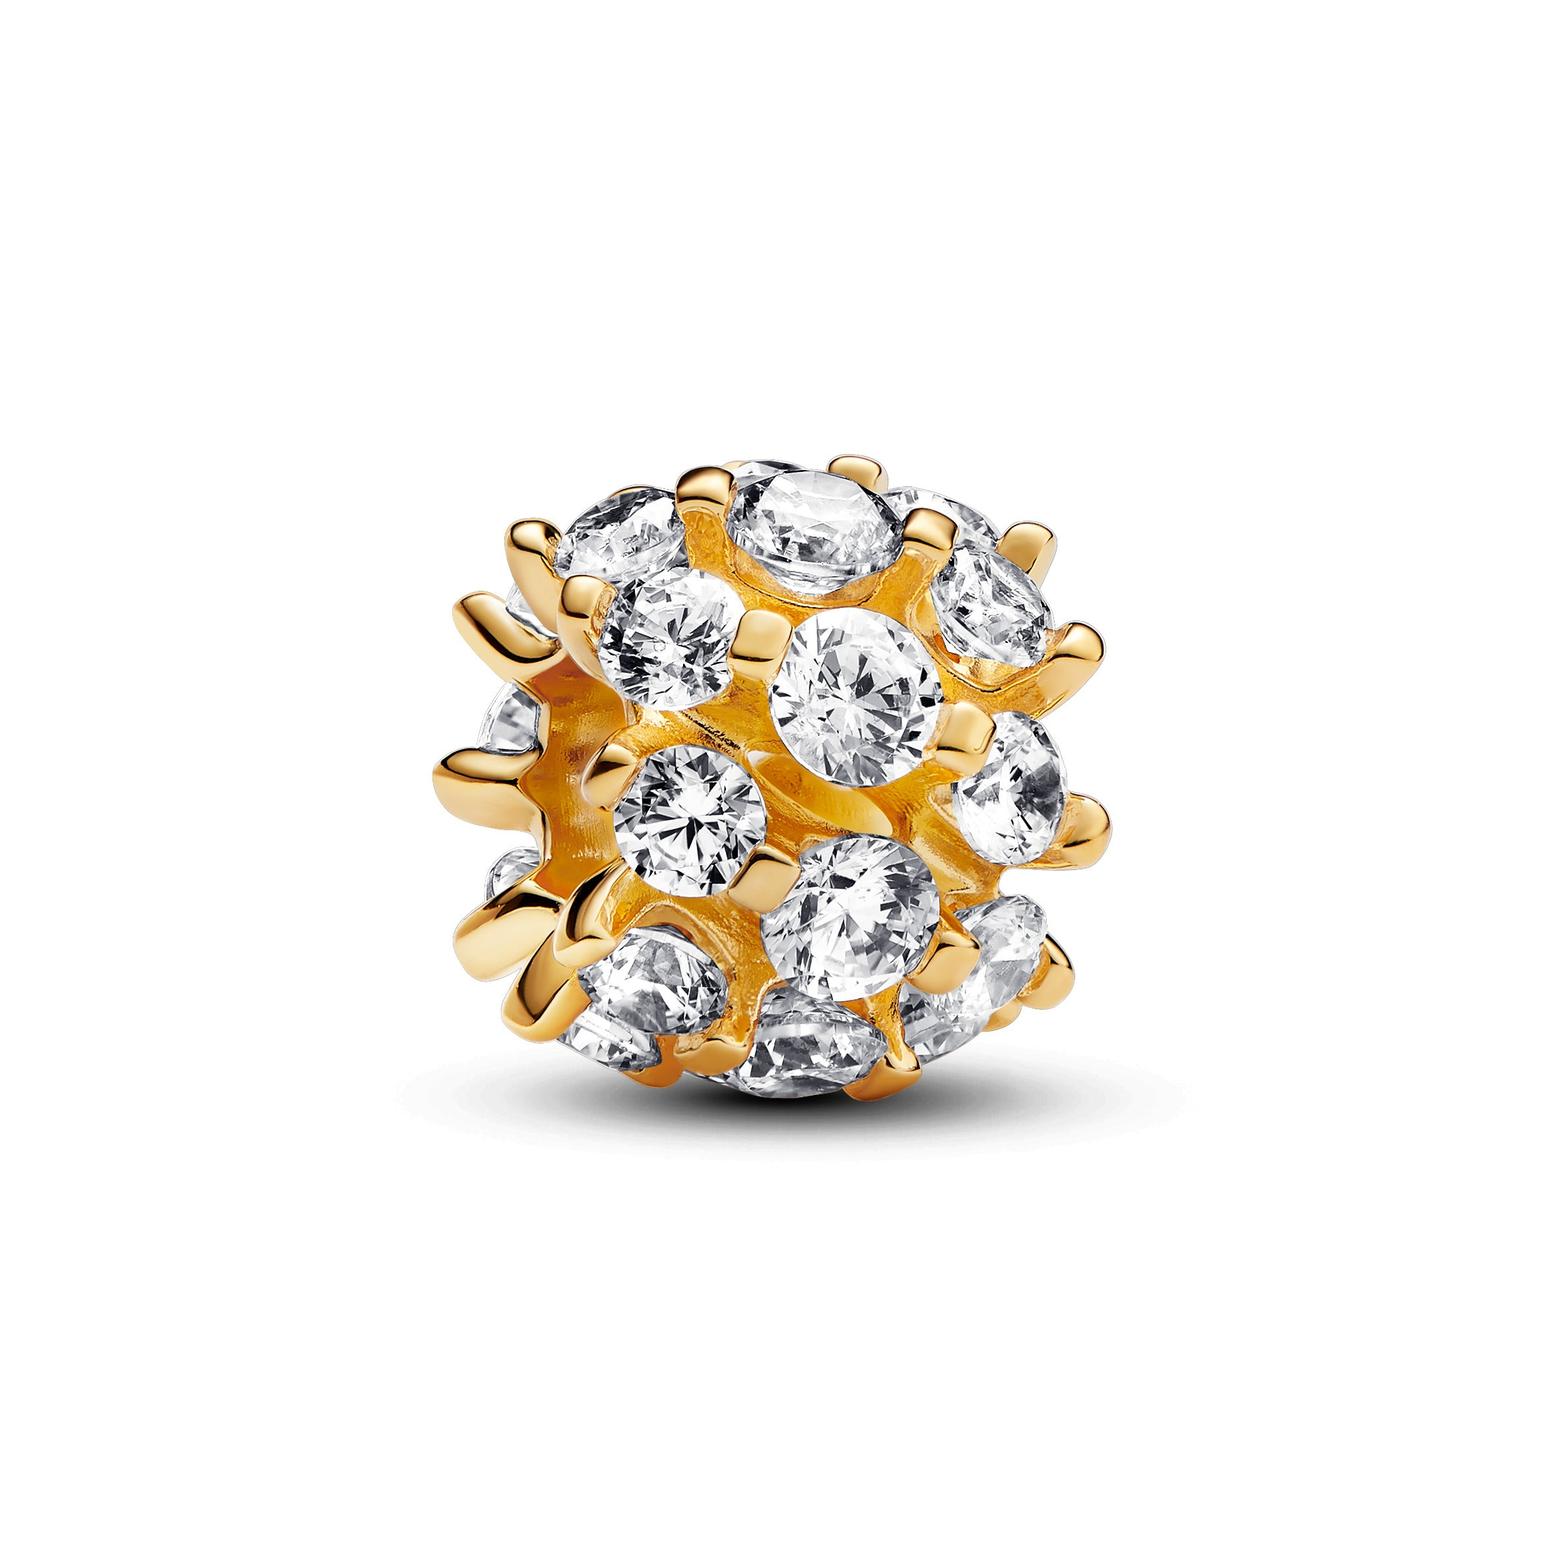 Pandora - Sparkling Round charm - Forgyldt metalblanding på tilbud til 699 kr. hos Vibholm Guld & Sølv